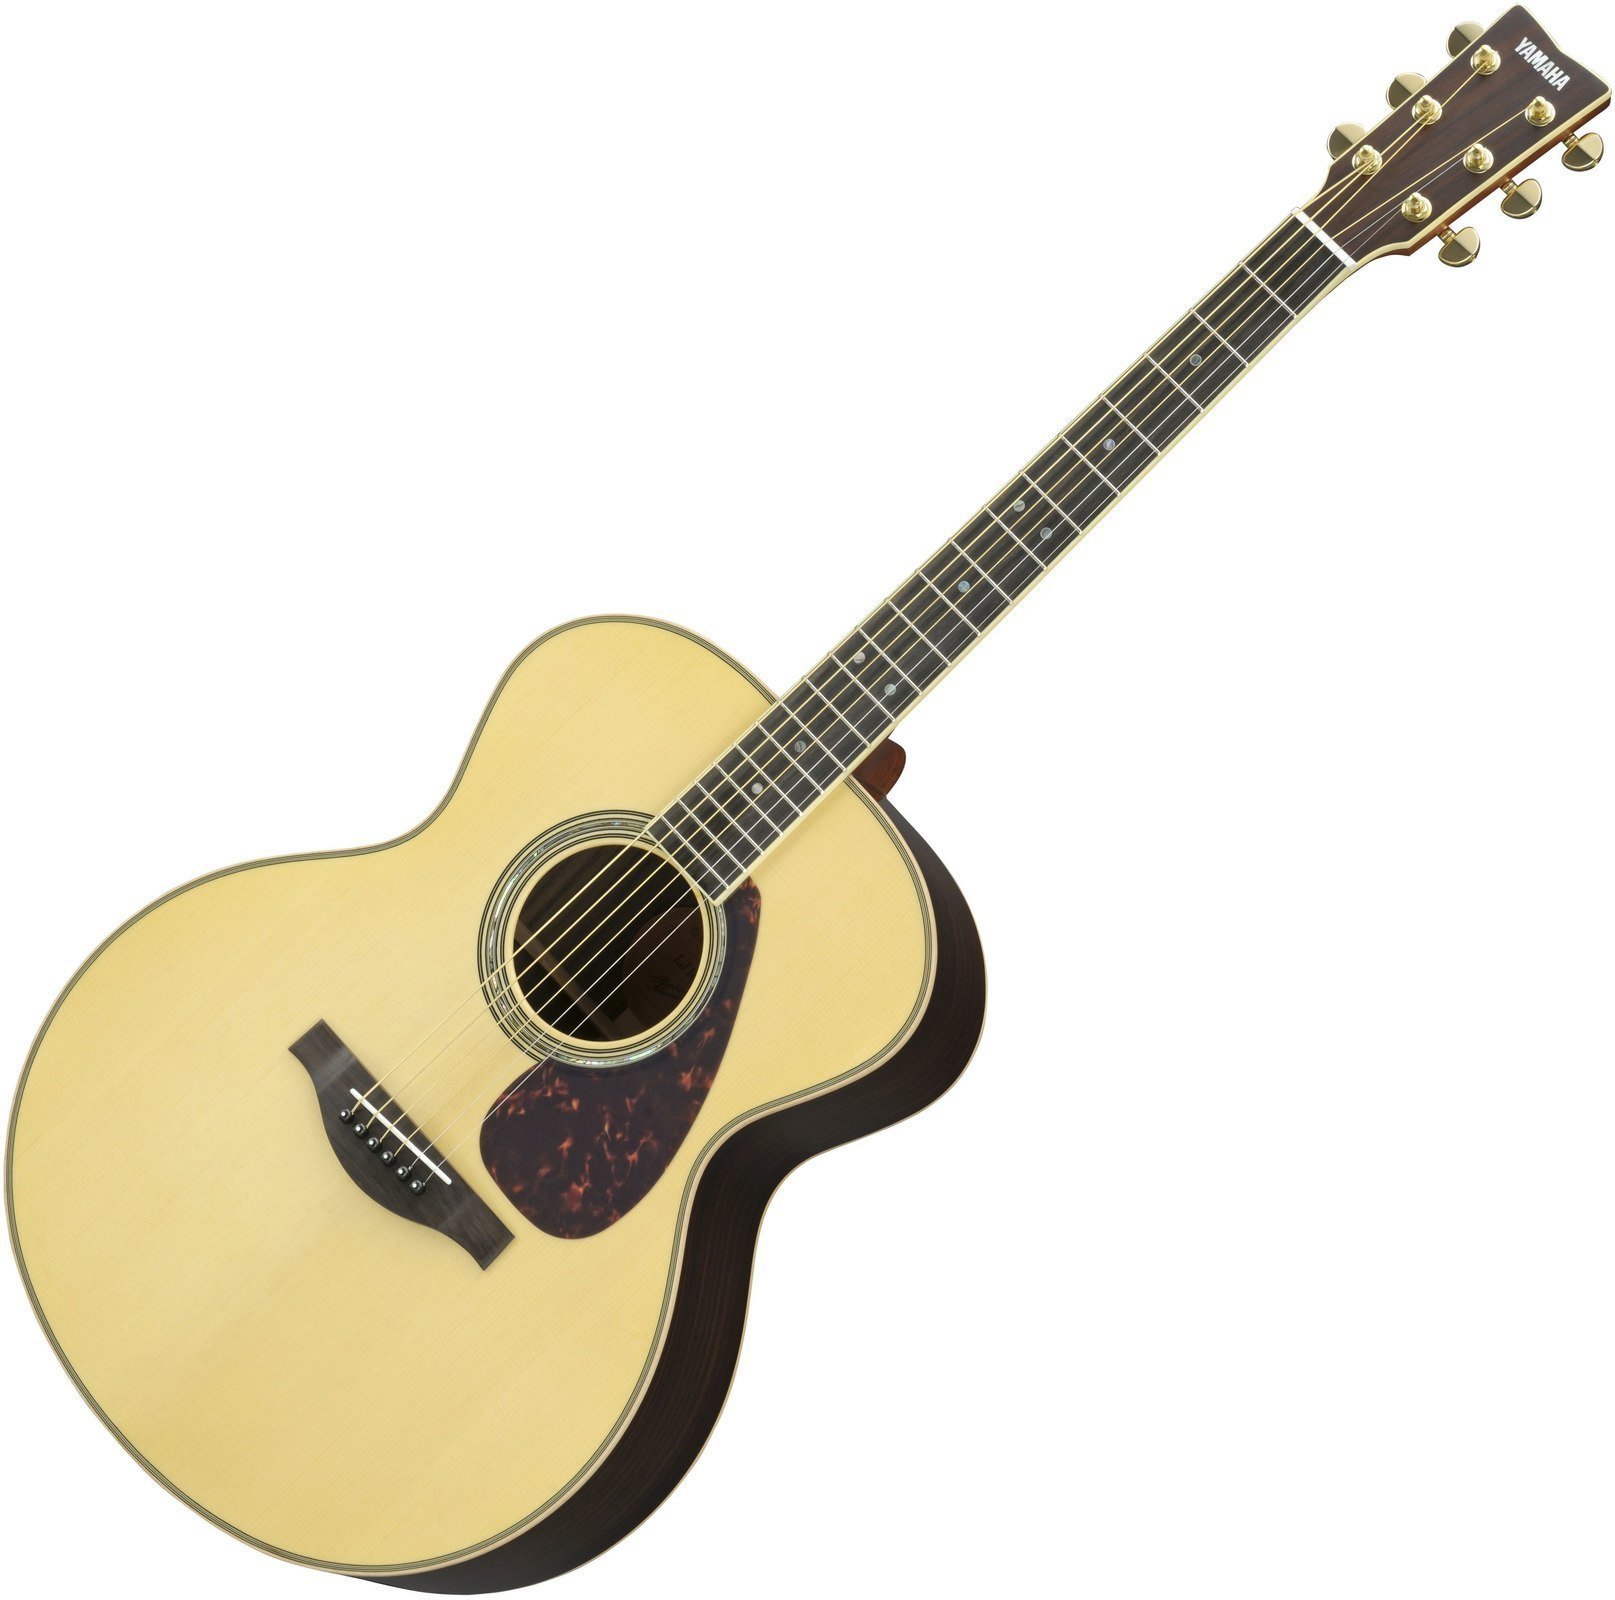 Jumbo elektro-akoestische gitaar Yamaha LJ 16 A.R.E. Natural